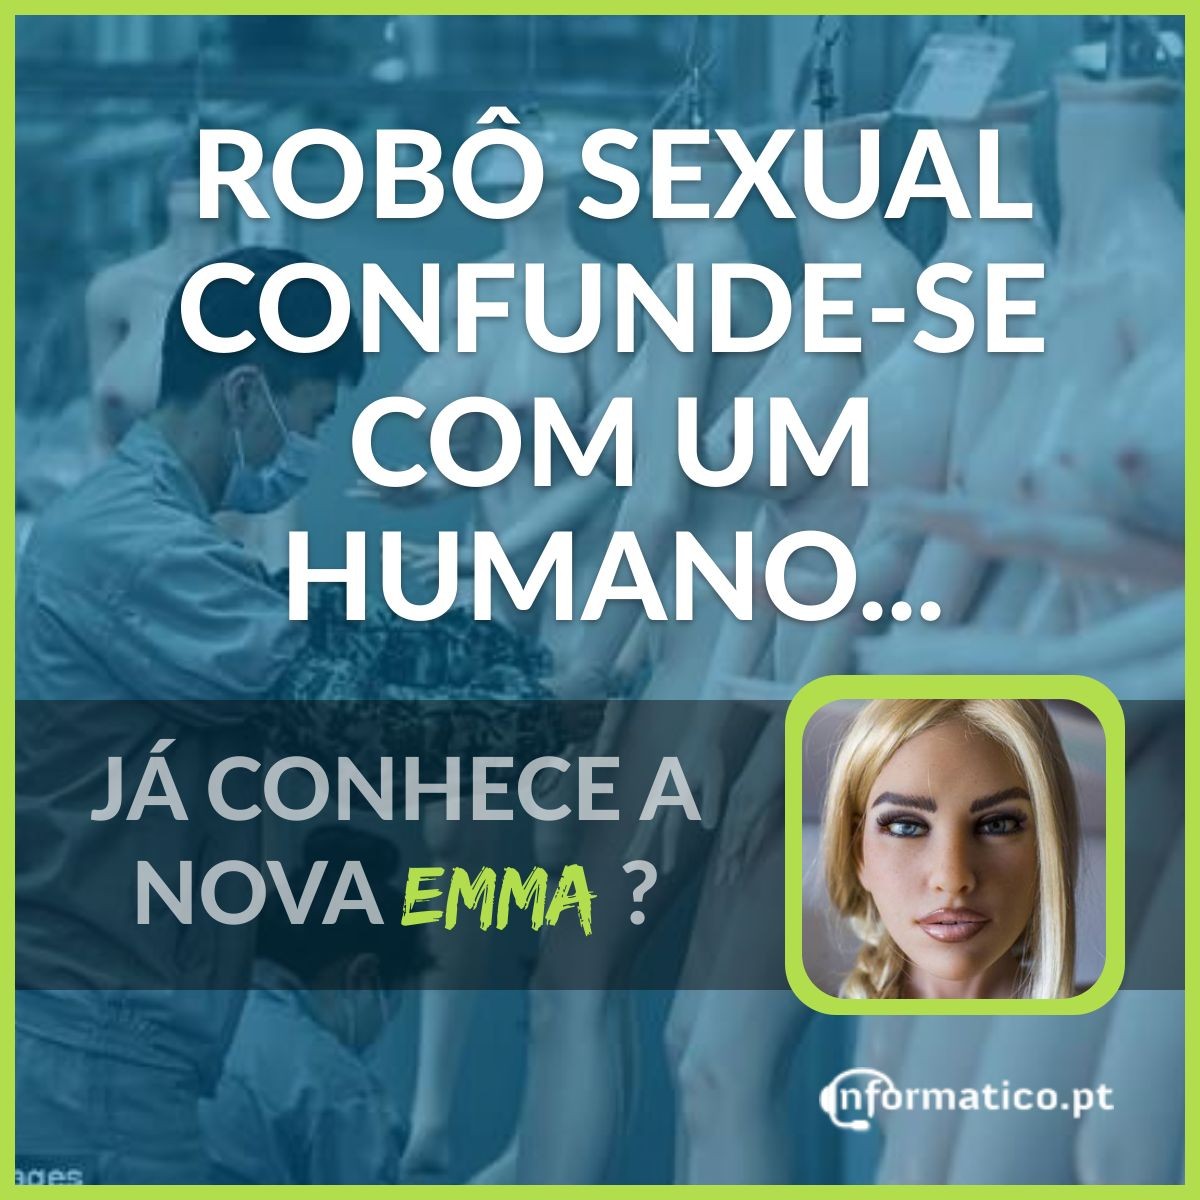 ROBO SEXUAL EMMA HUMANO